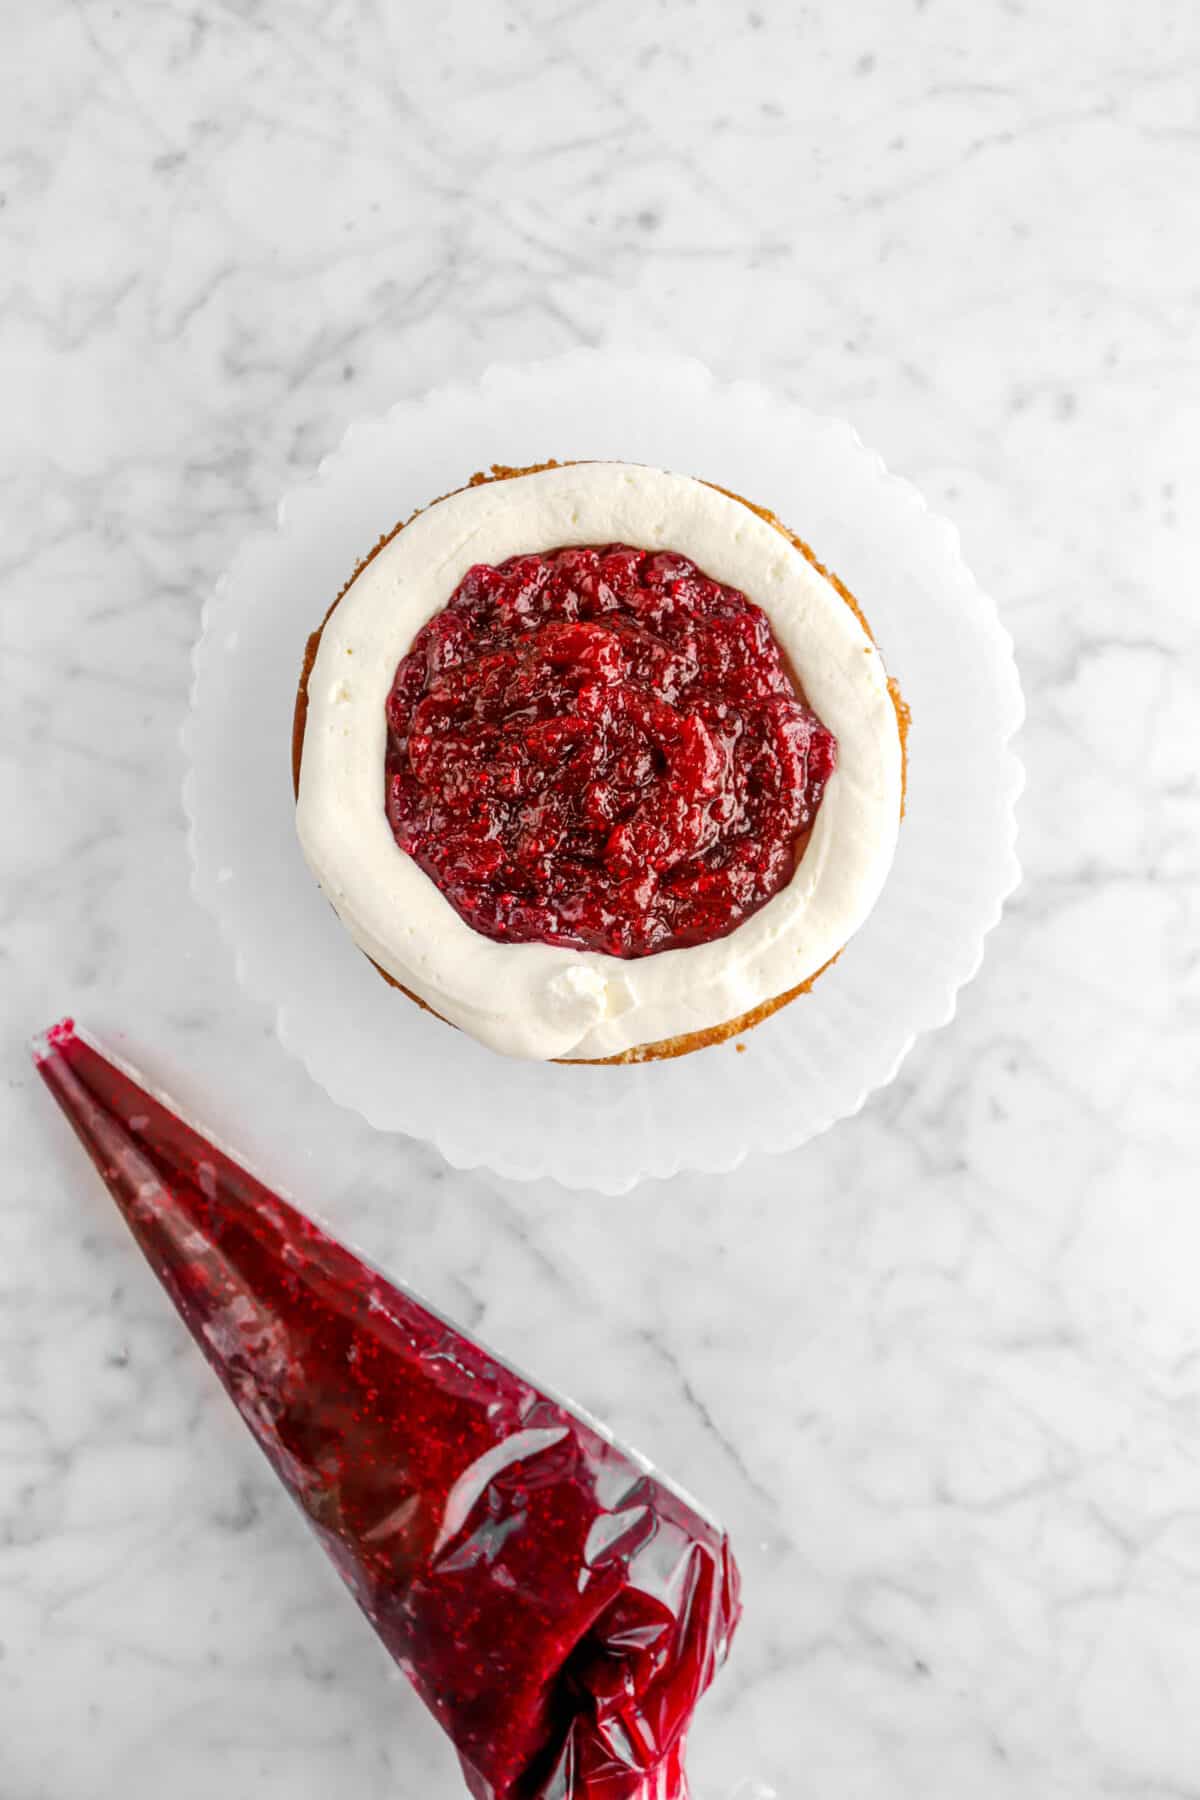 cranberry jam filling inside white chocolate ganache circle